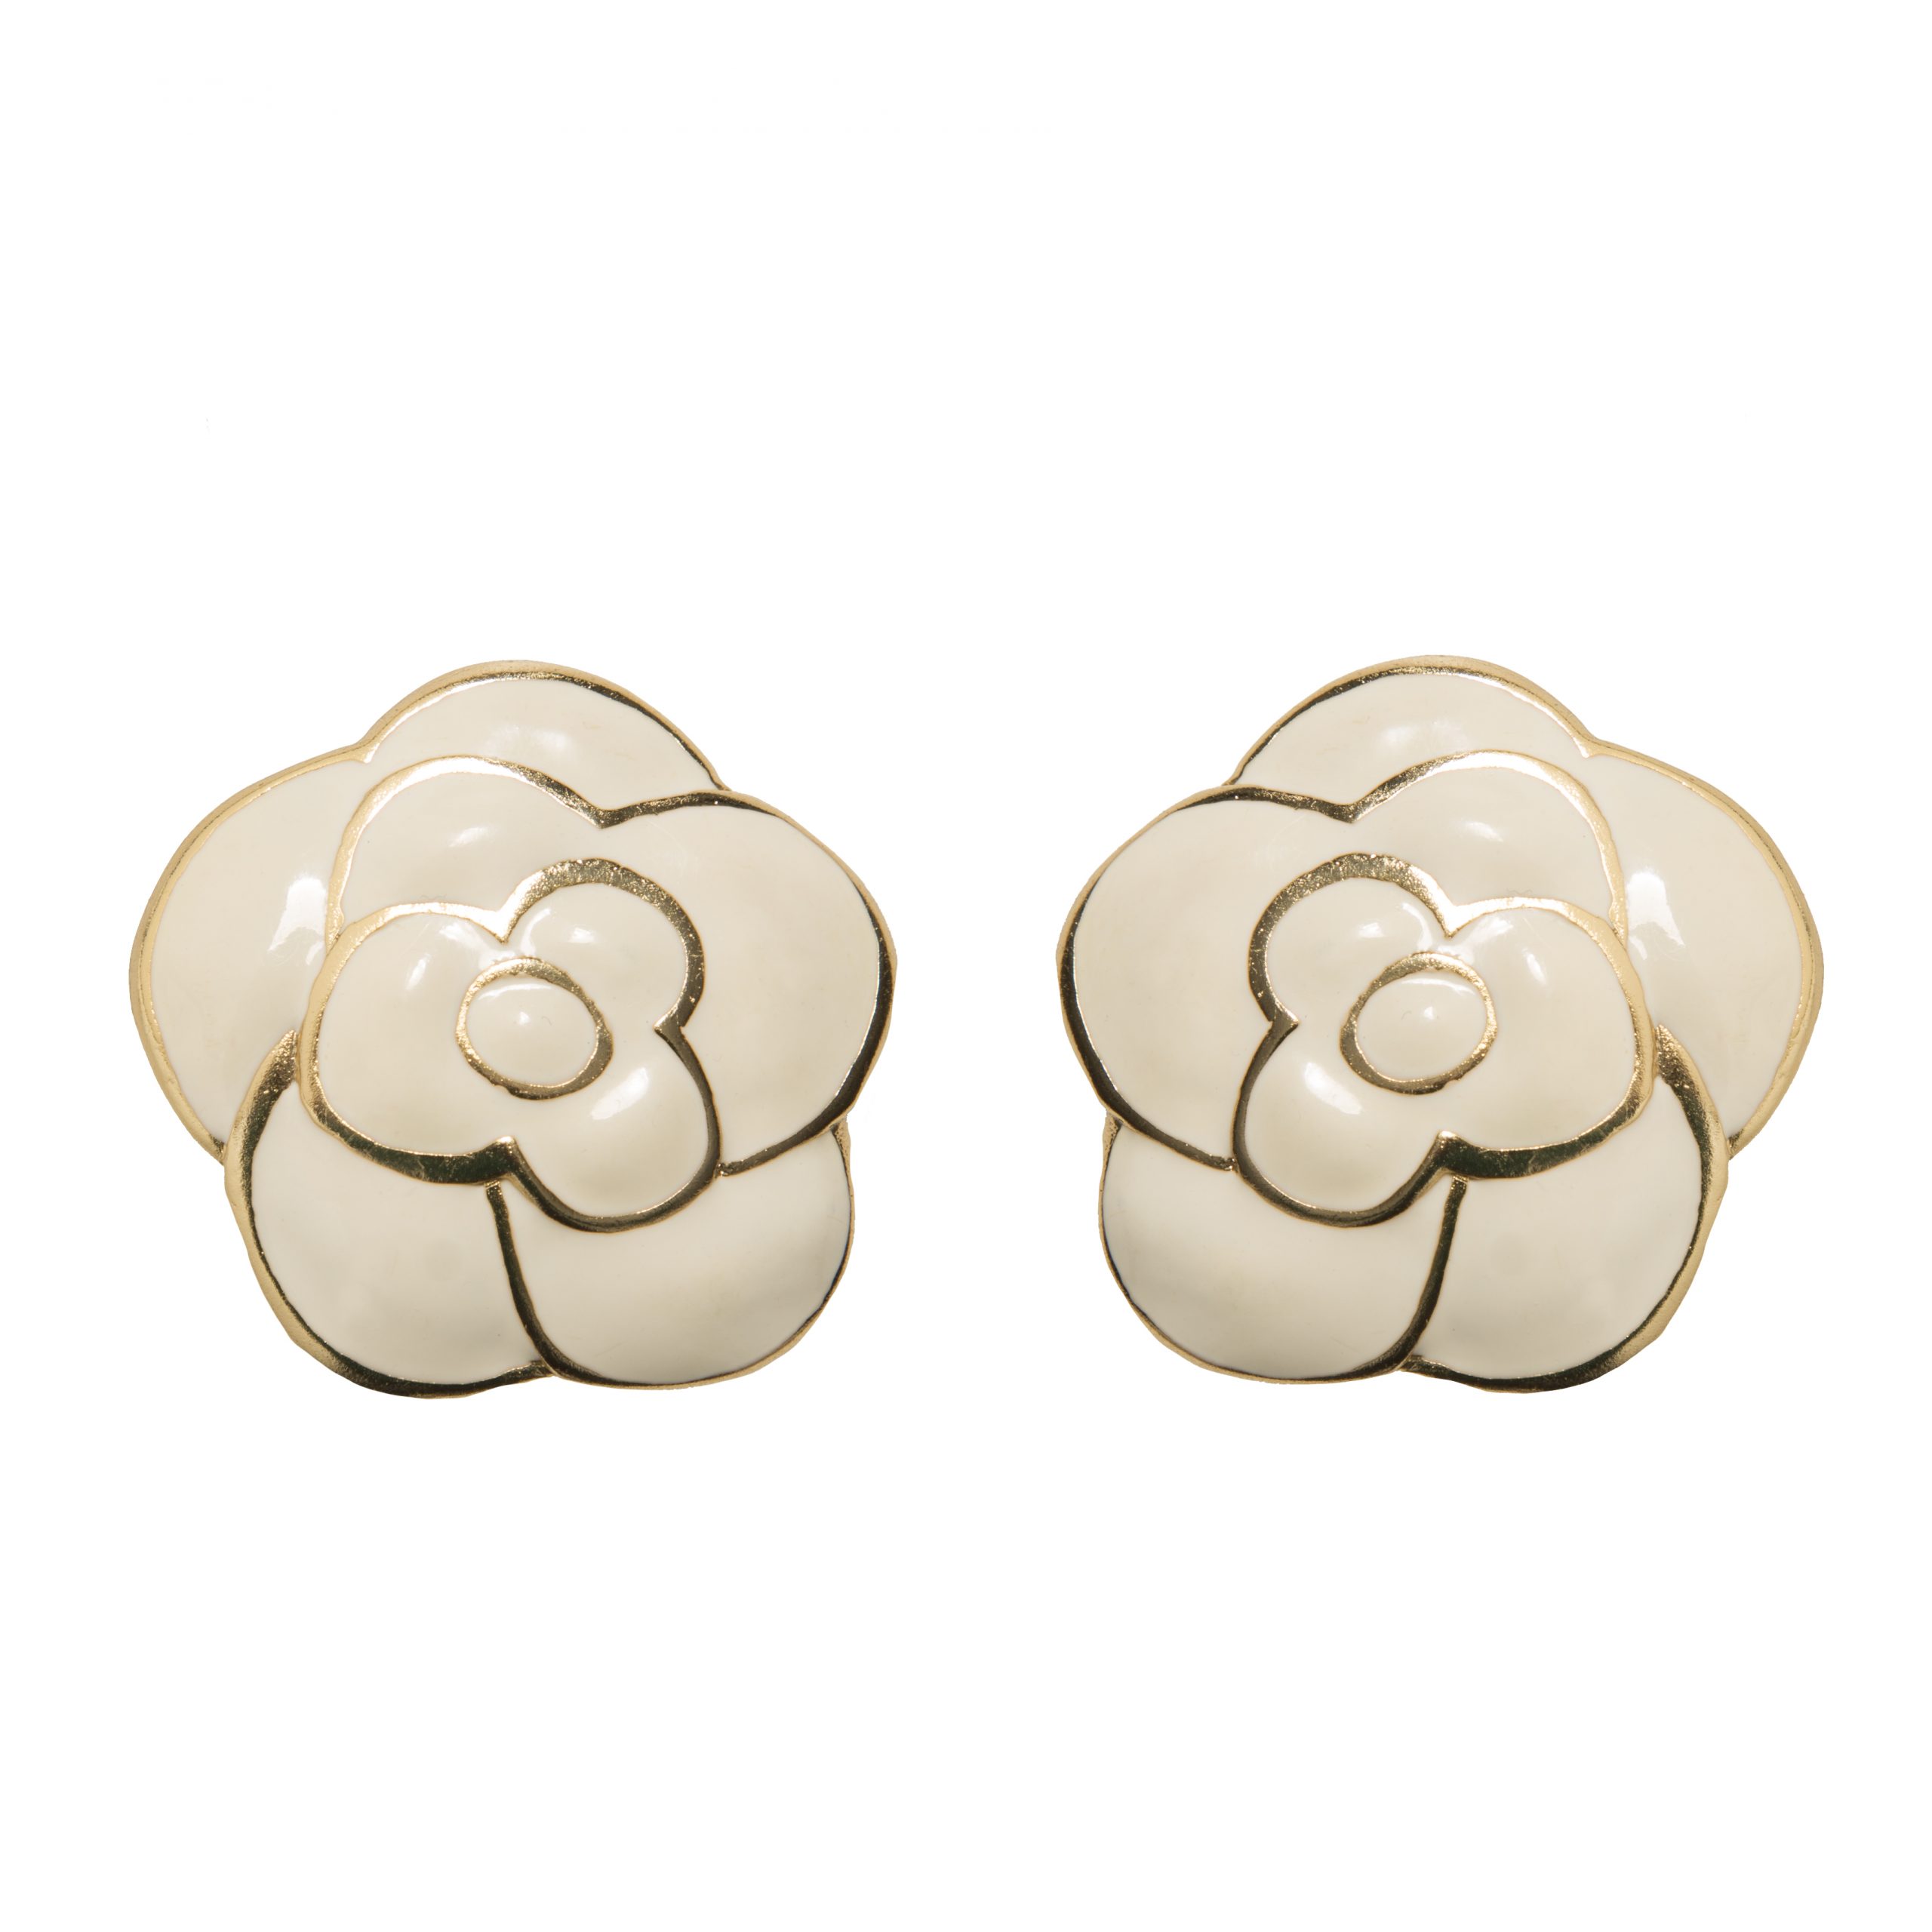 Vintage beige enamel flower earrings